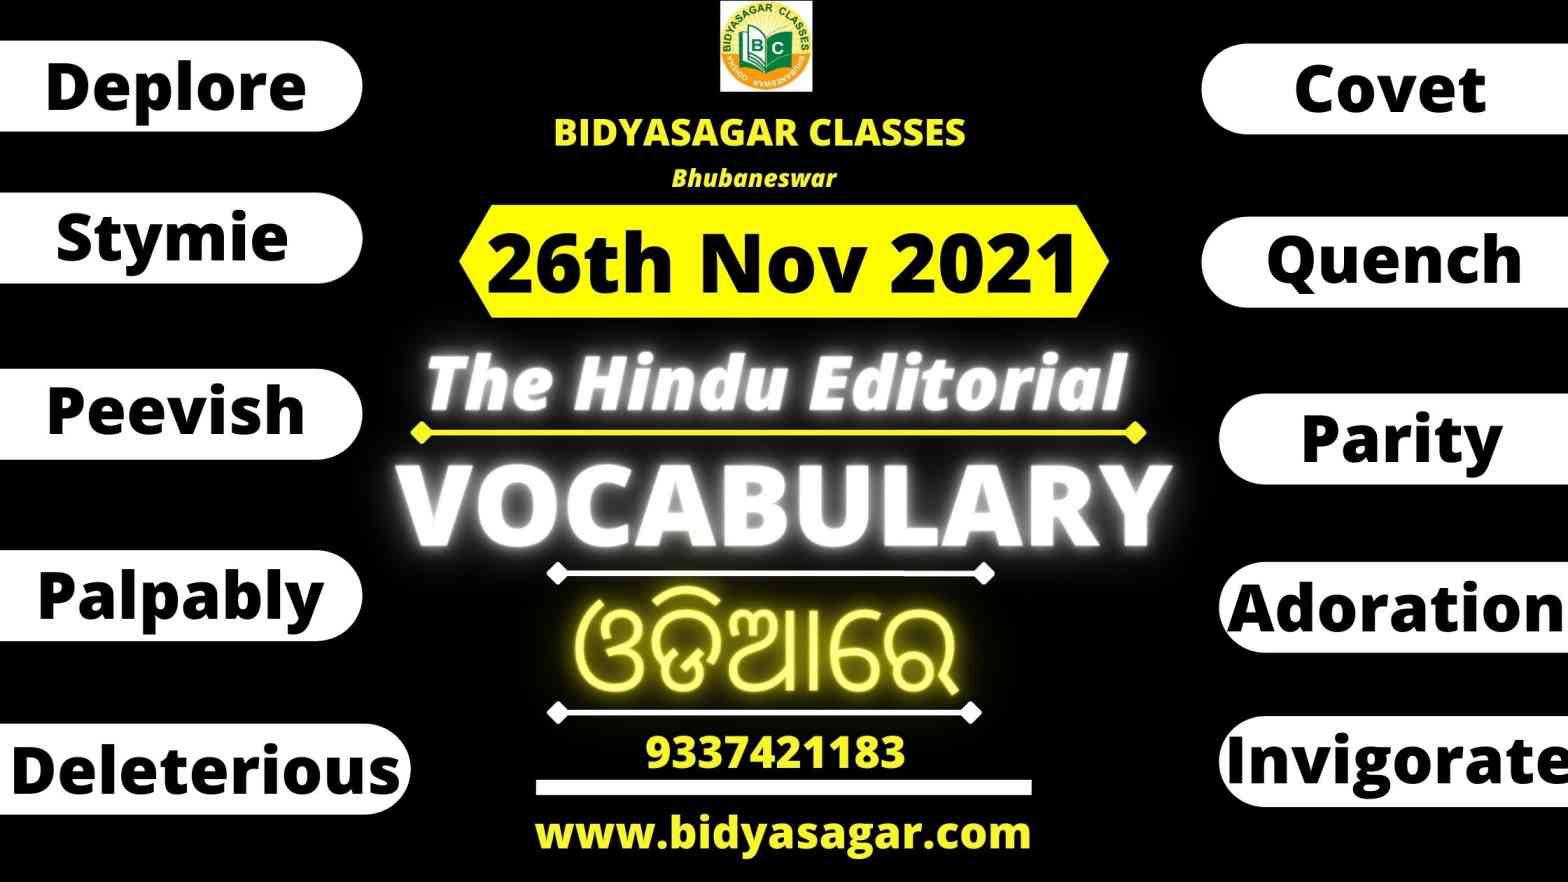 The Hindu Editorial Vocabulary of 26th November 2021